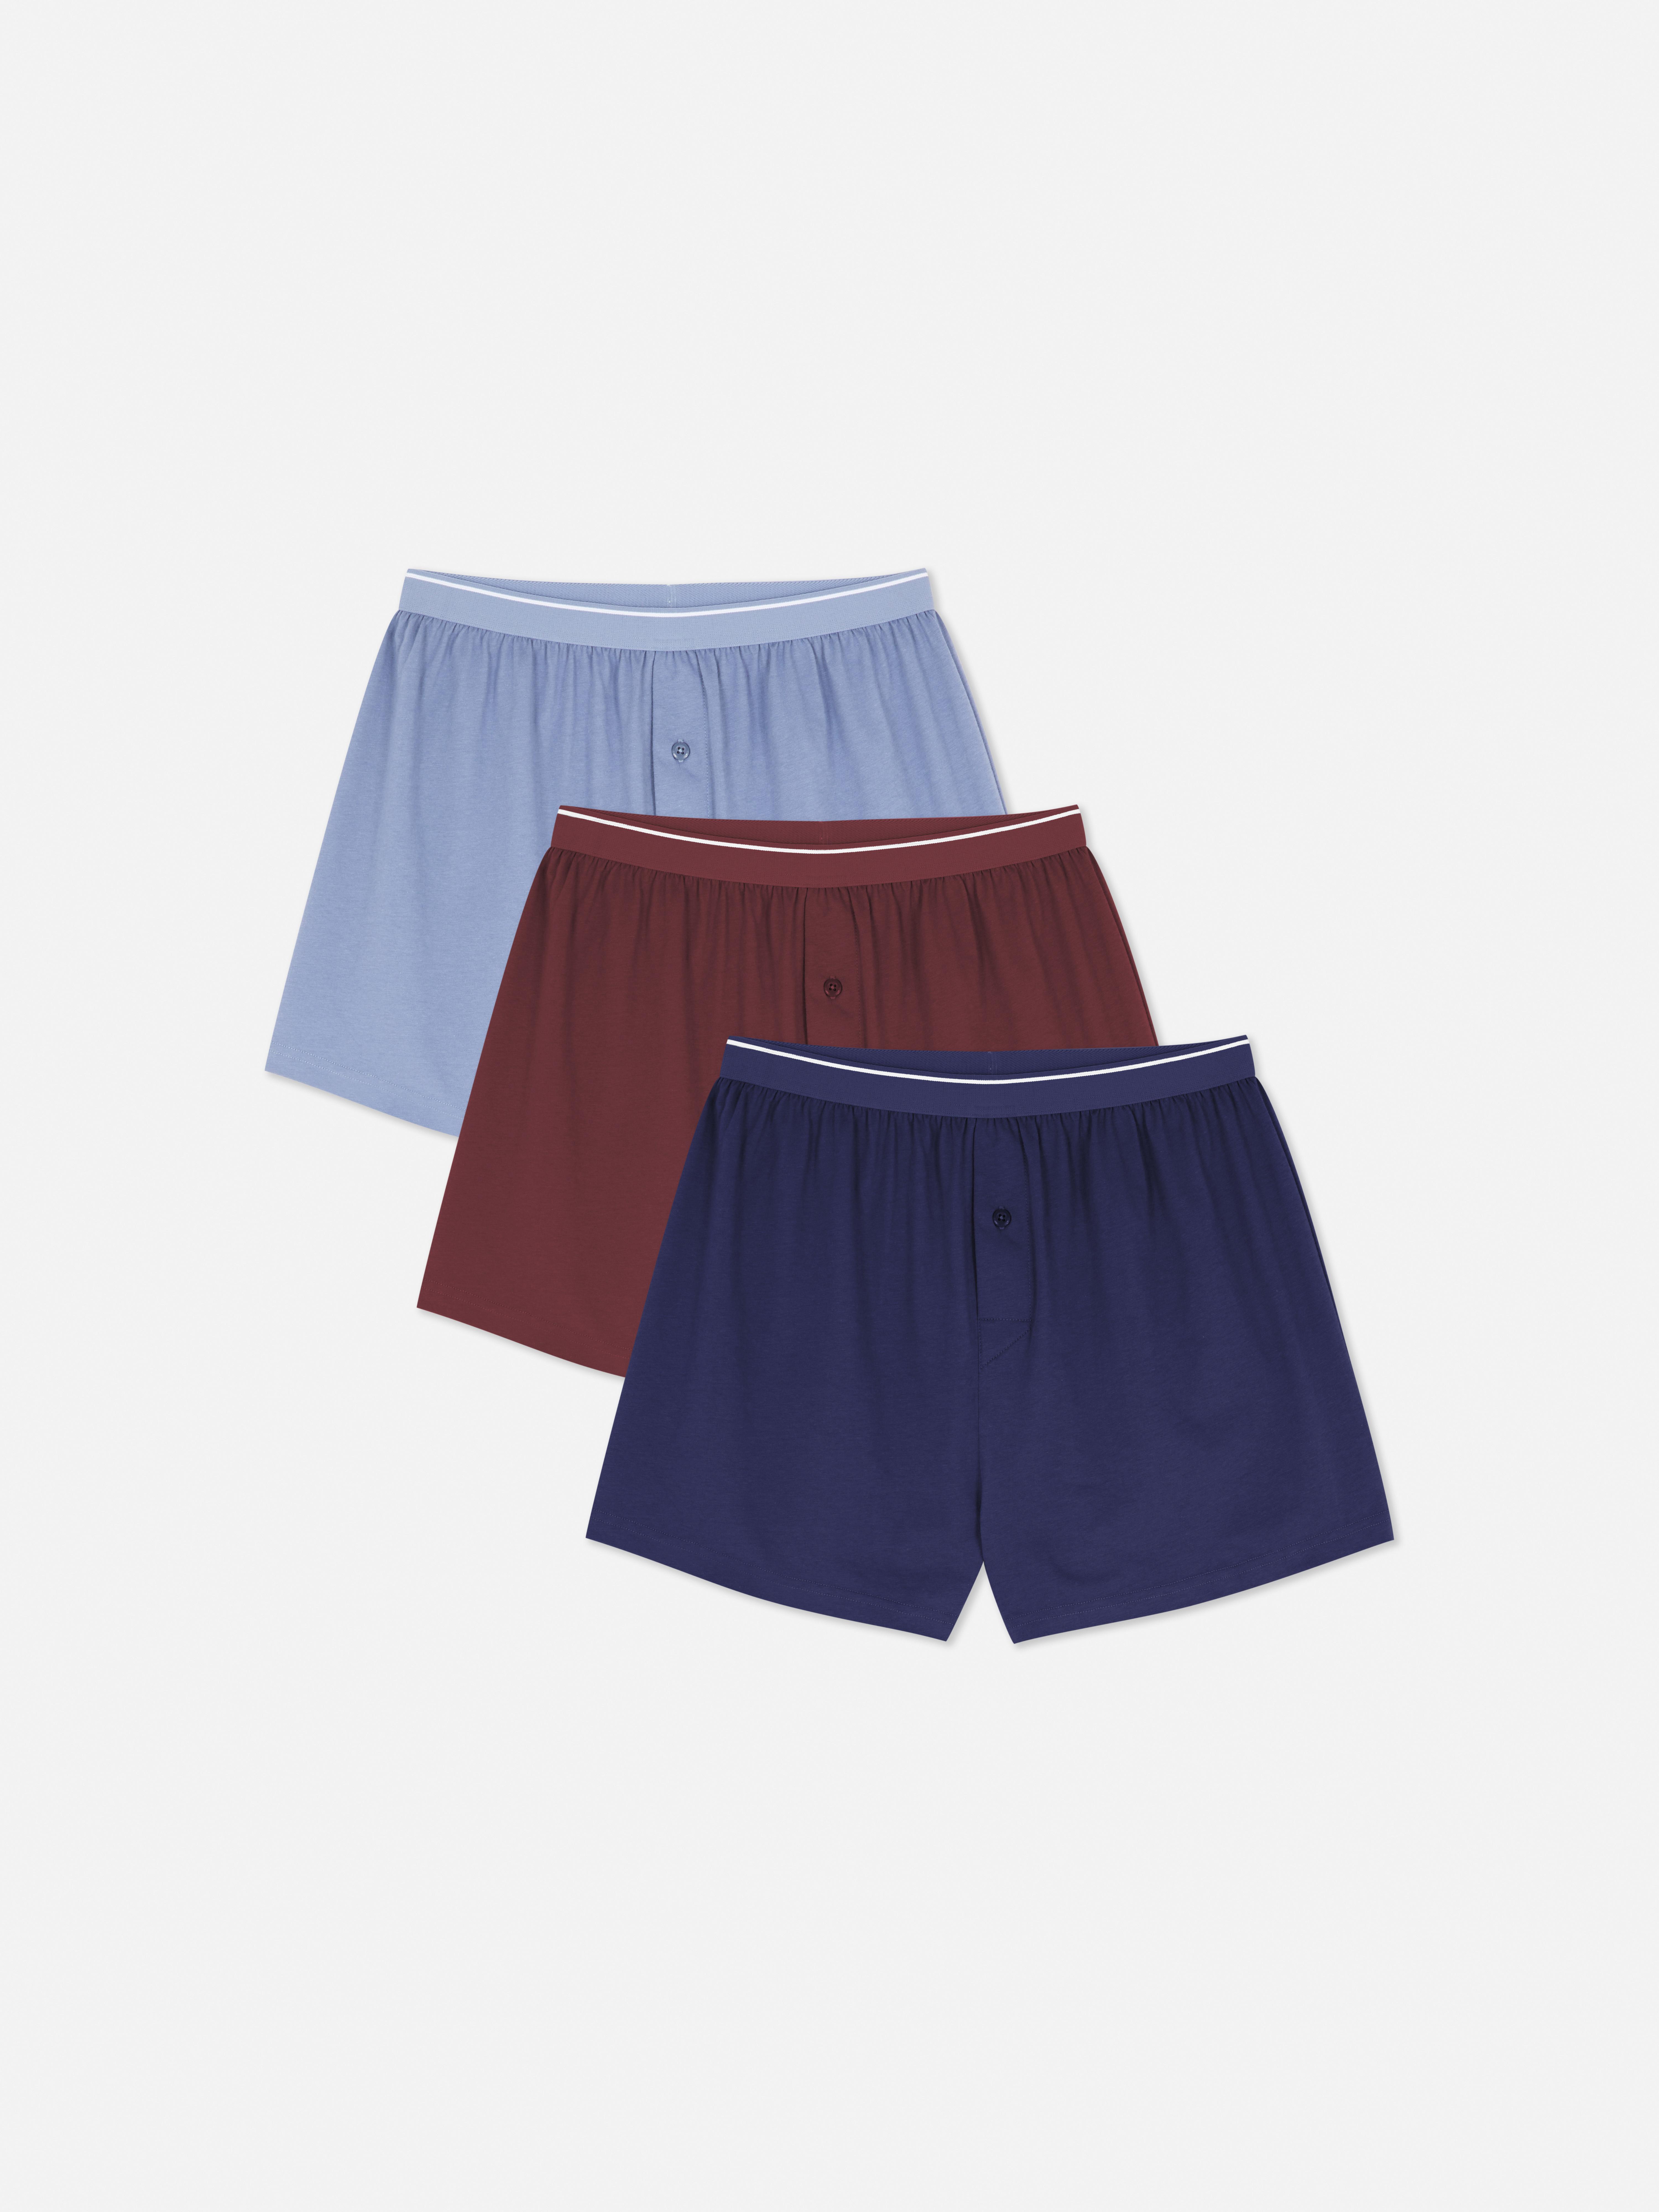 Primark, Underwear & Socks, Primark Woven Boxers Cotton Rich